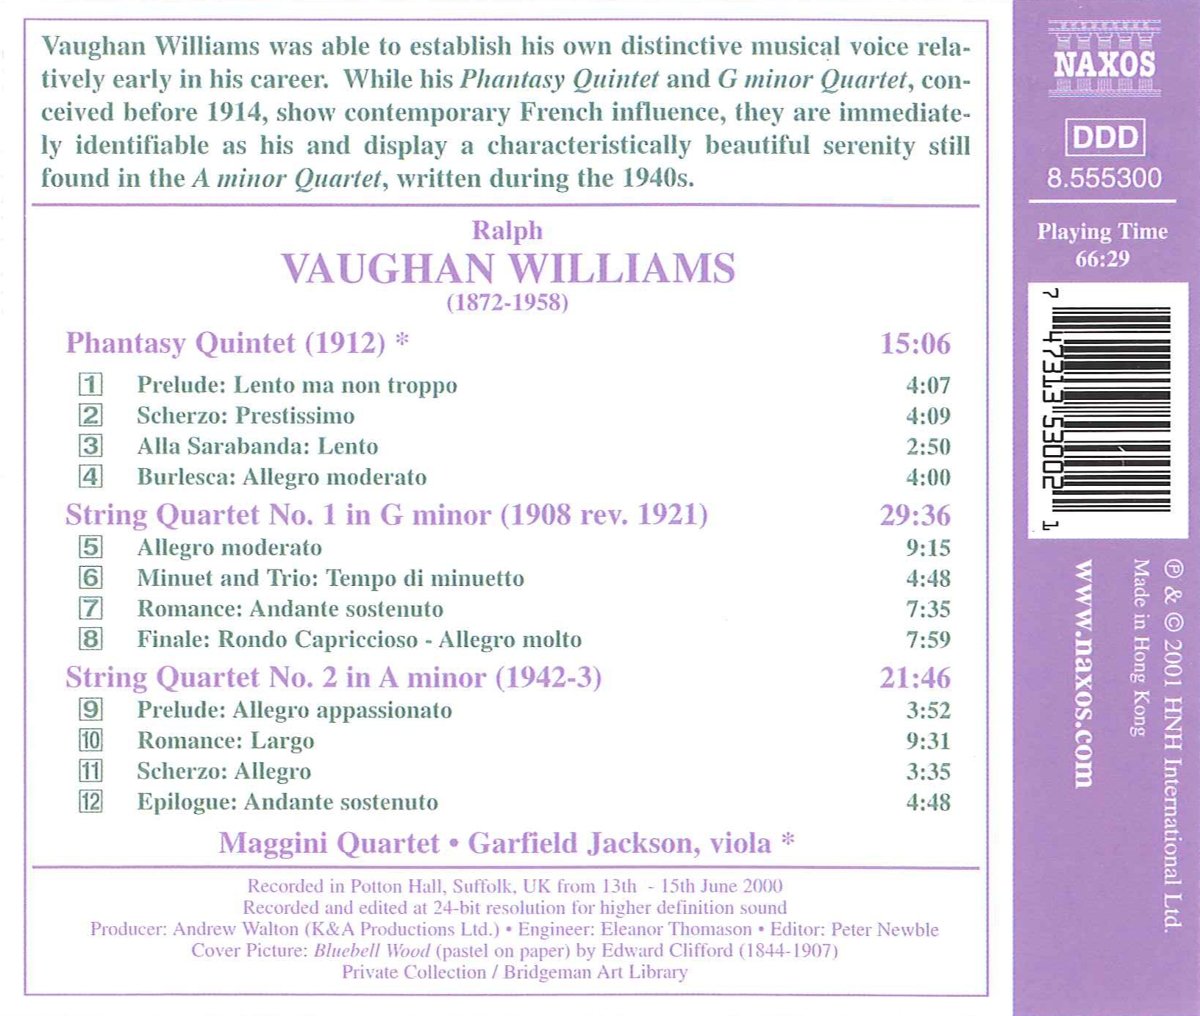 Garfield Jackson 본 윌리엄스: 현악 사중주 1, 2번 (Vaughan Williams : String Quartets Nos. 1, 2) 